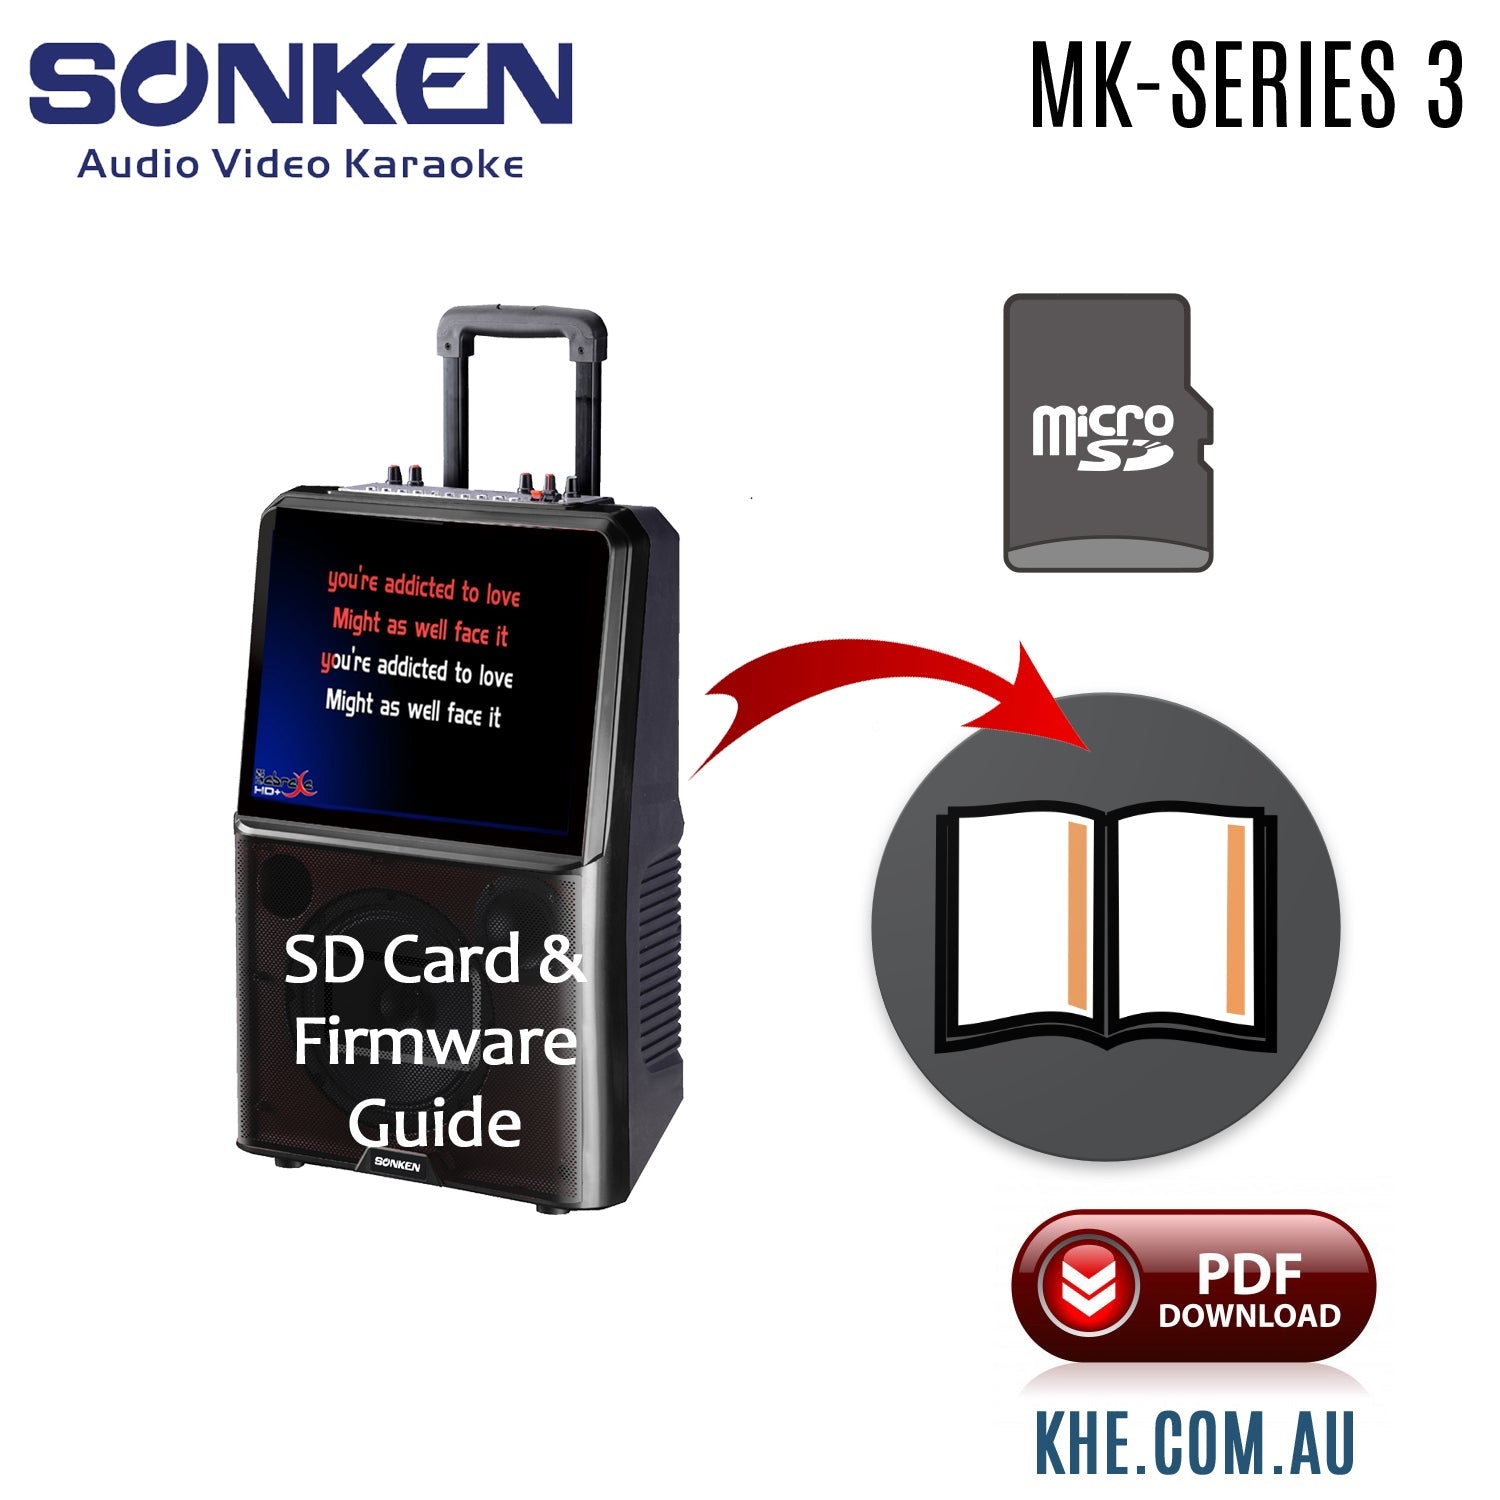 Firmware Upgrade on SD Card for Sonken Max Karaoke Series 3 - Karaoke Home Entertainment